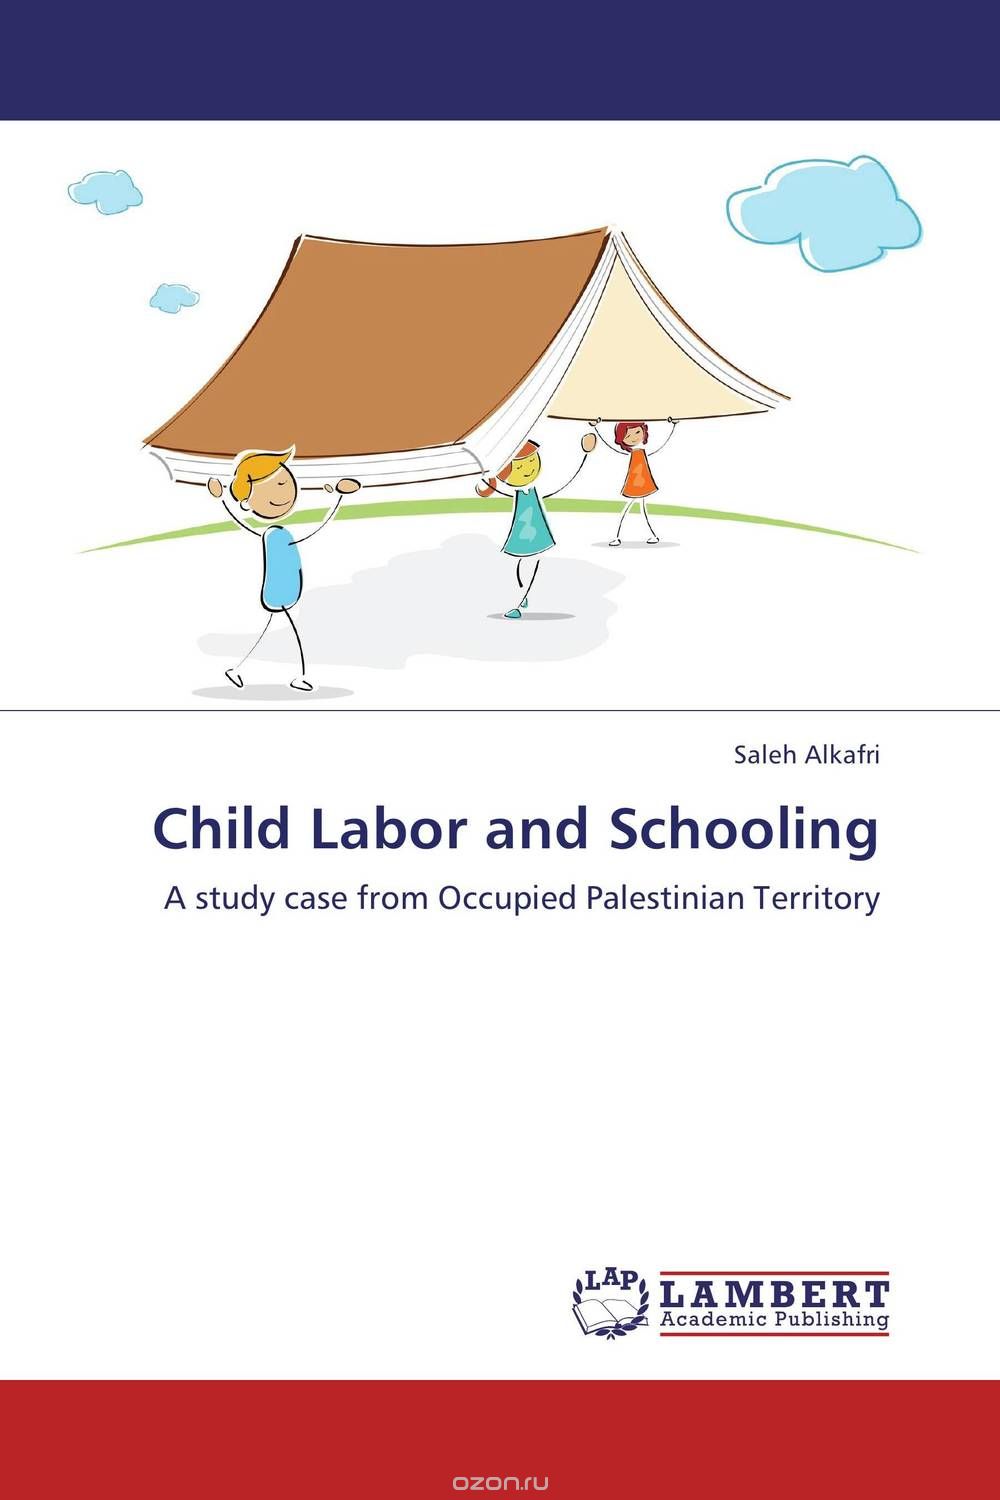 Скачать книгу "Child Labor and Schooling"